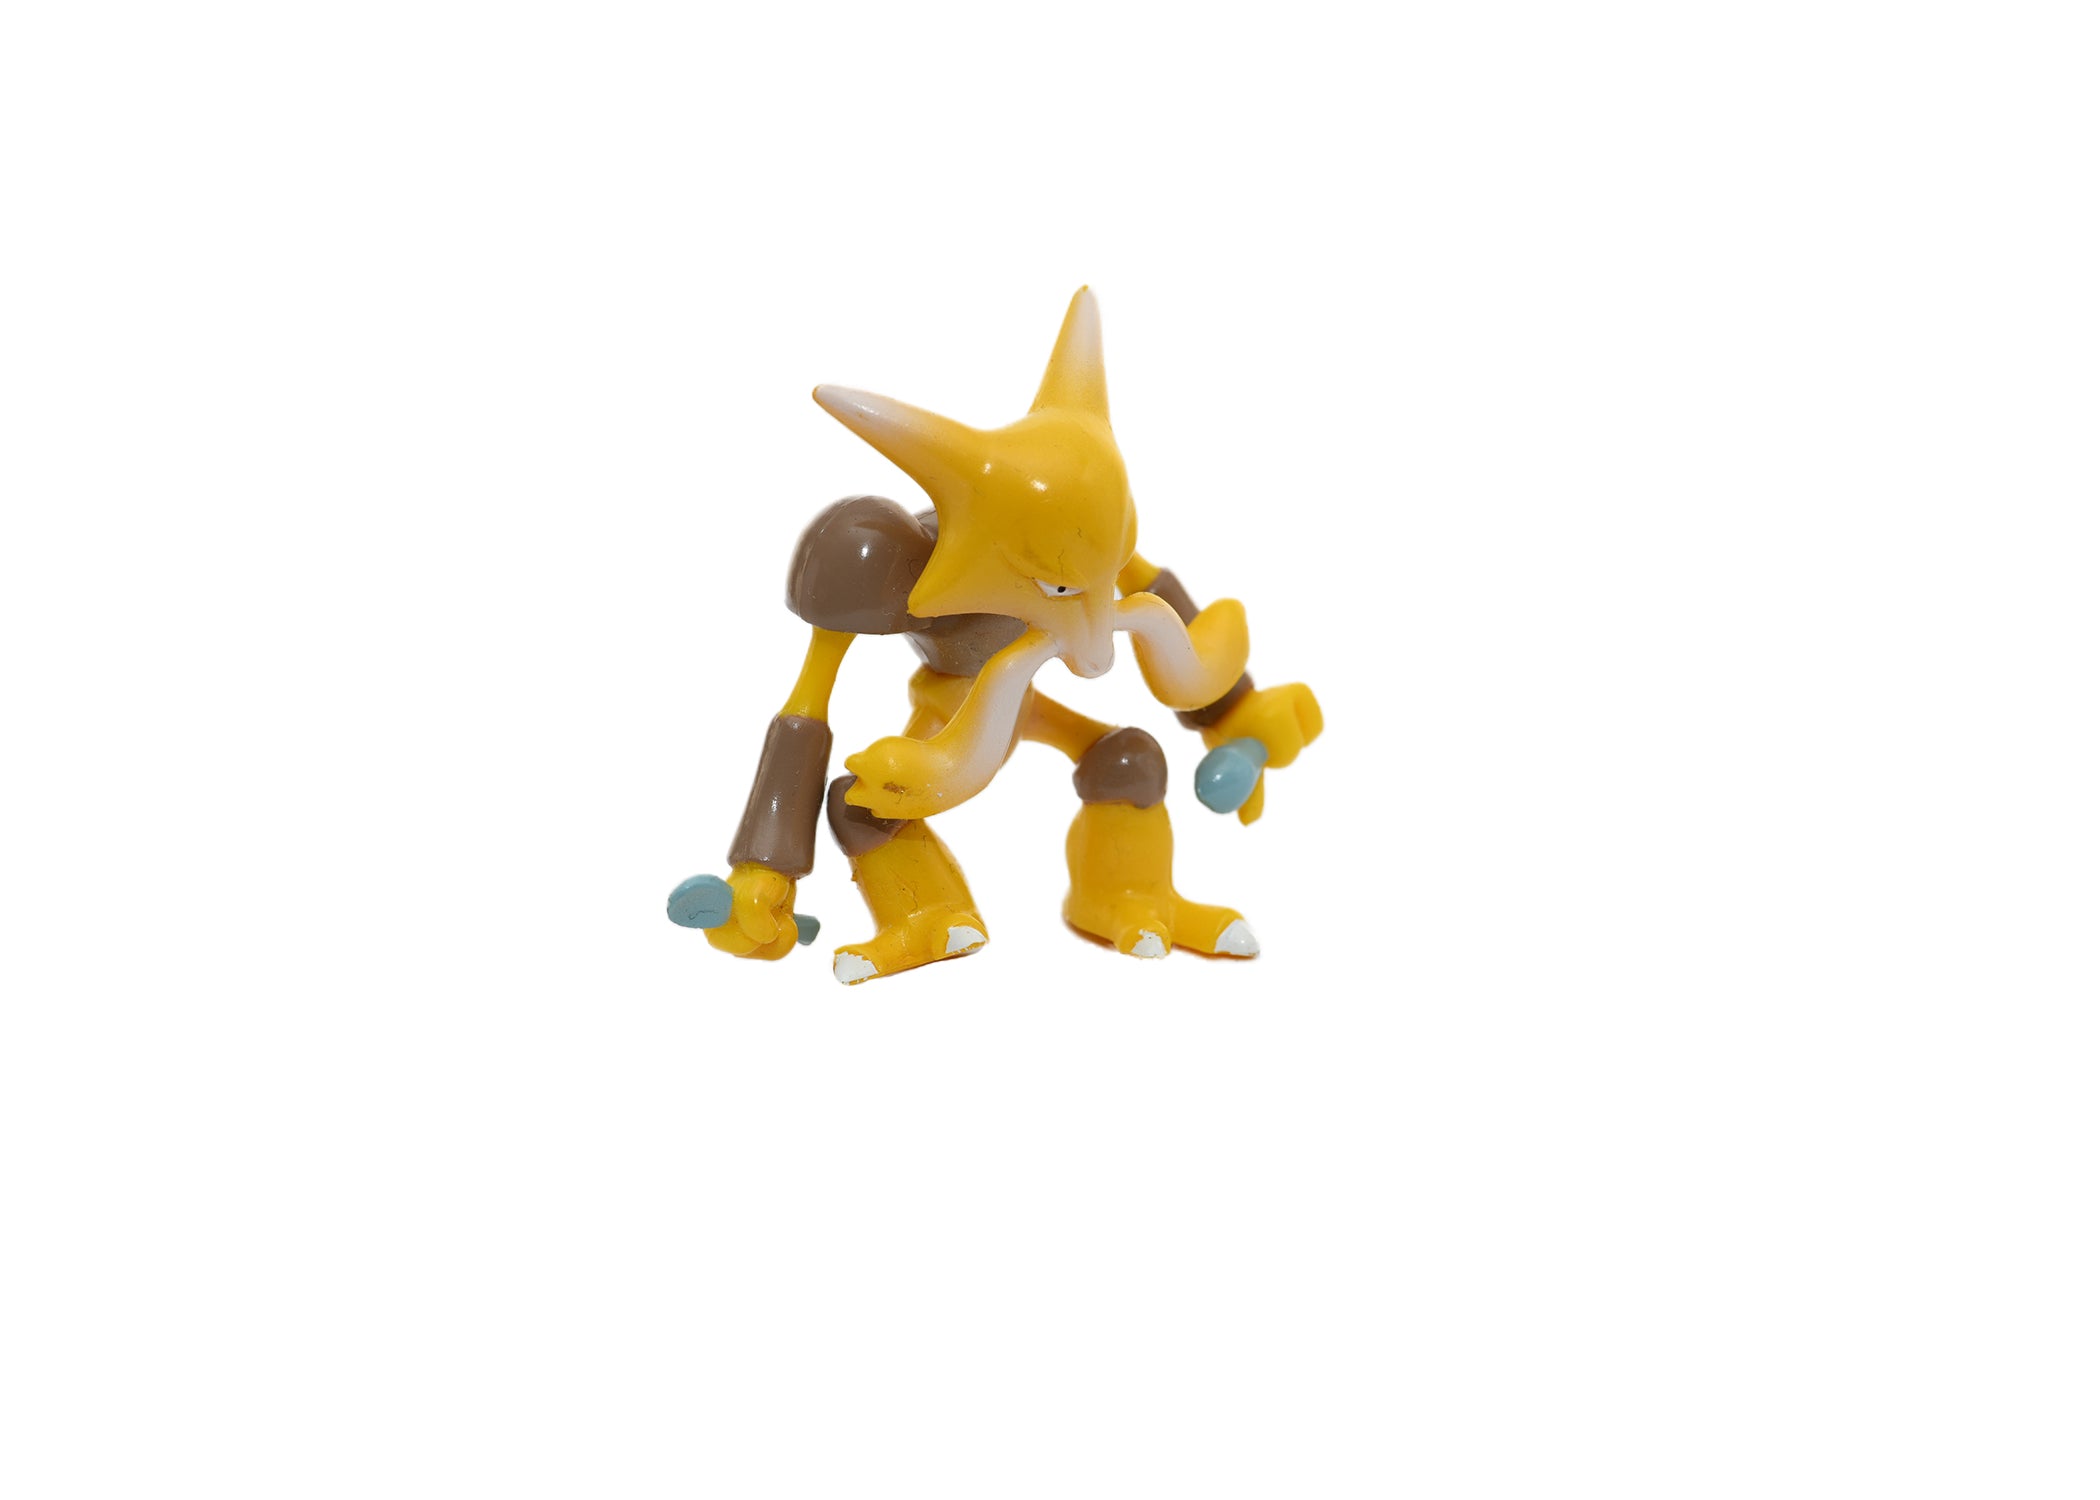 {Icc toy}Pokemon Alakazam Models Snorlax Politoed Figurine